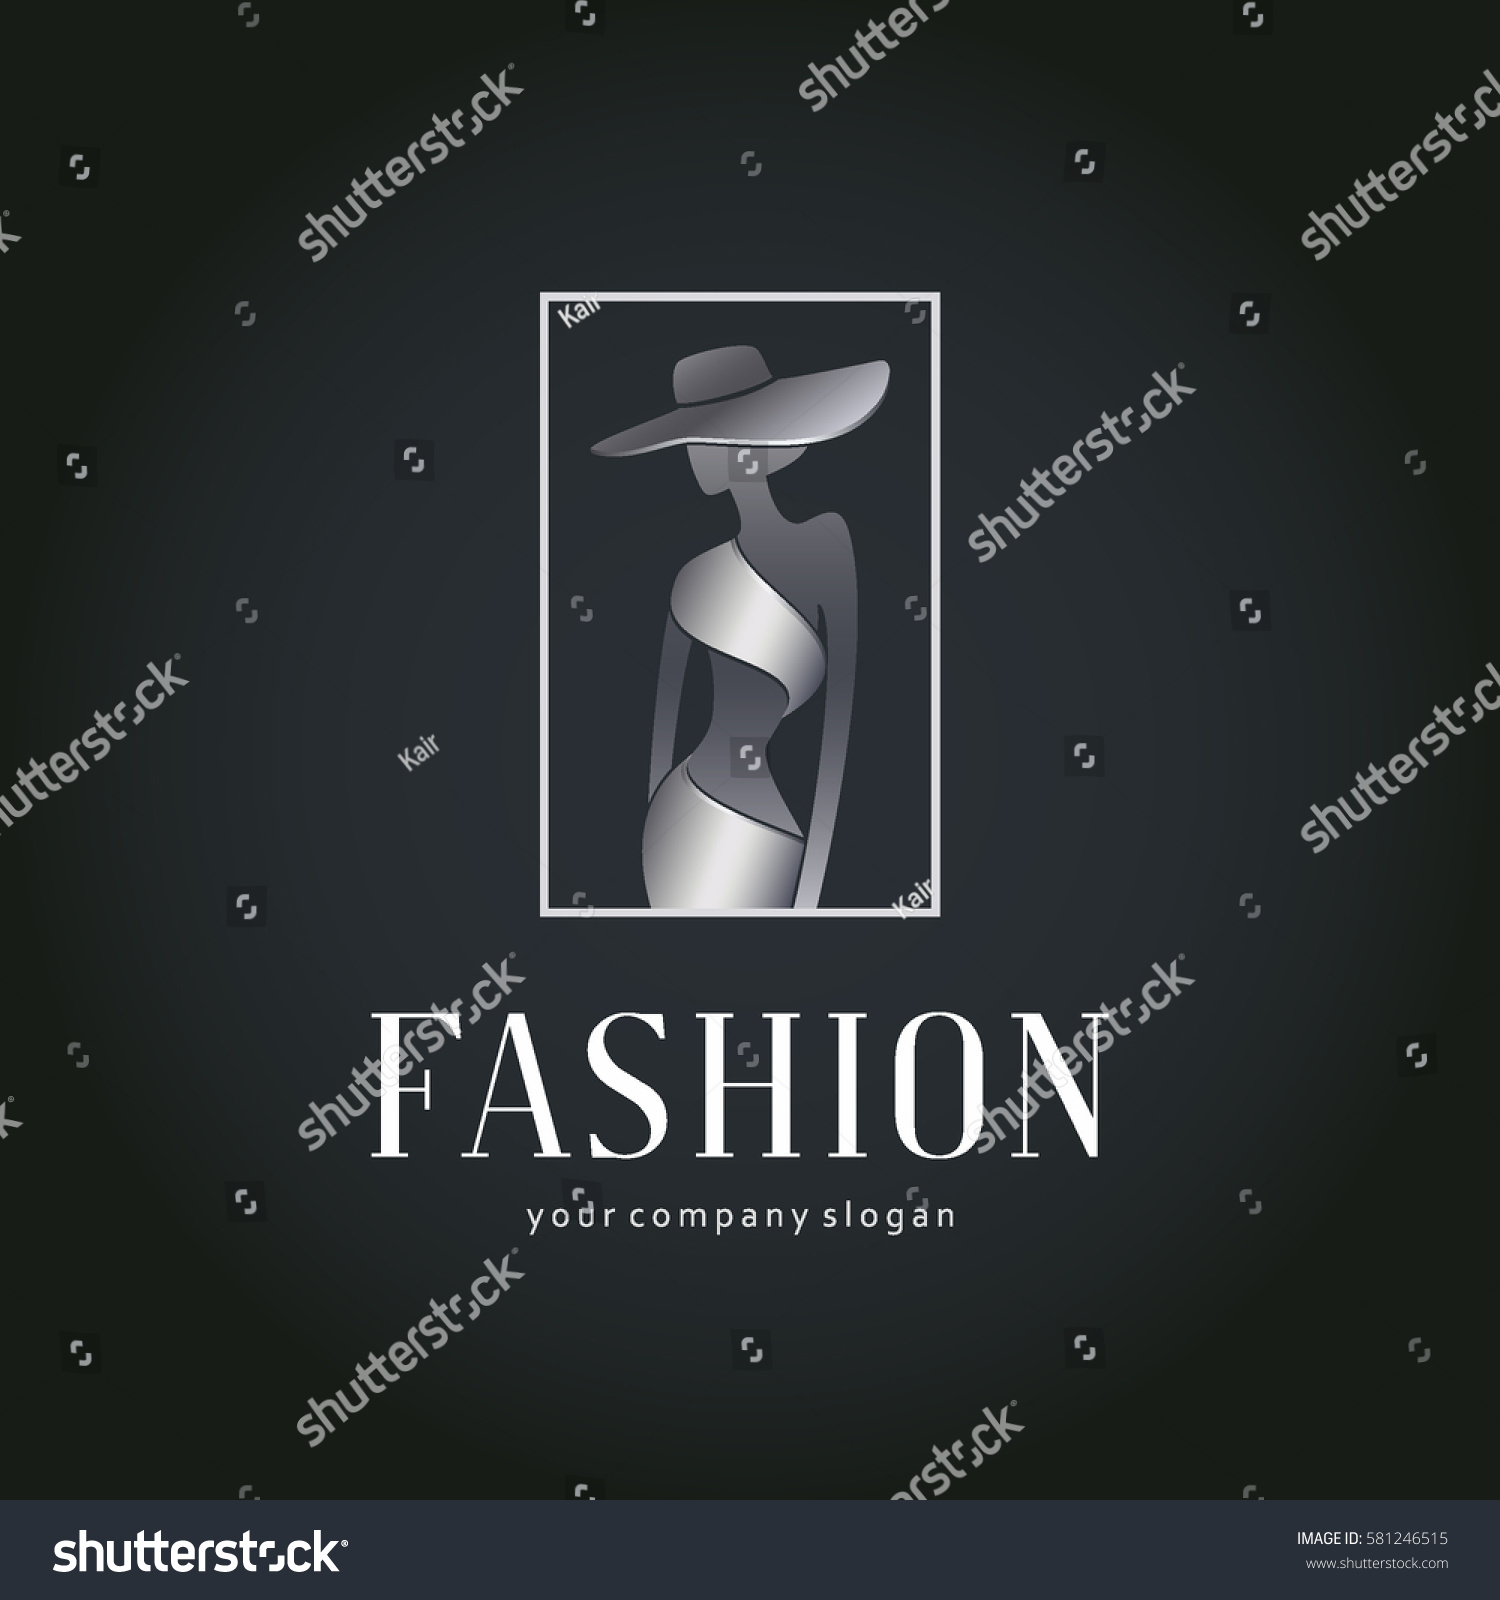 858 Ladies Tailor Logo Images, Stock Photos & Vectors | Shutterstock